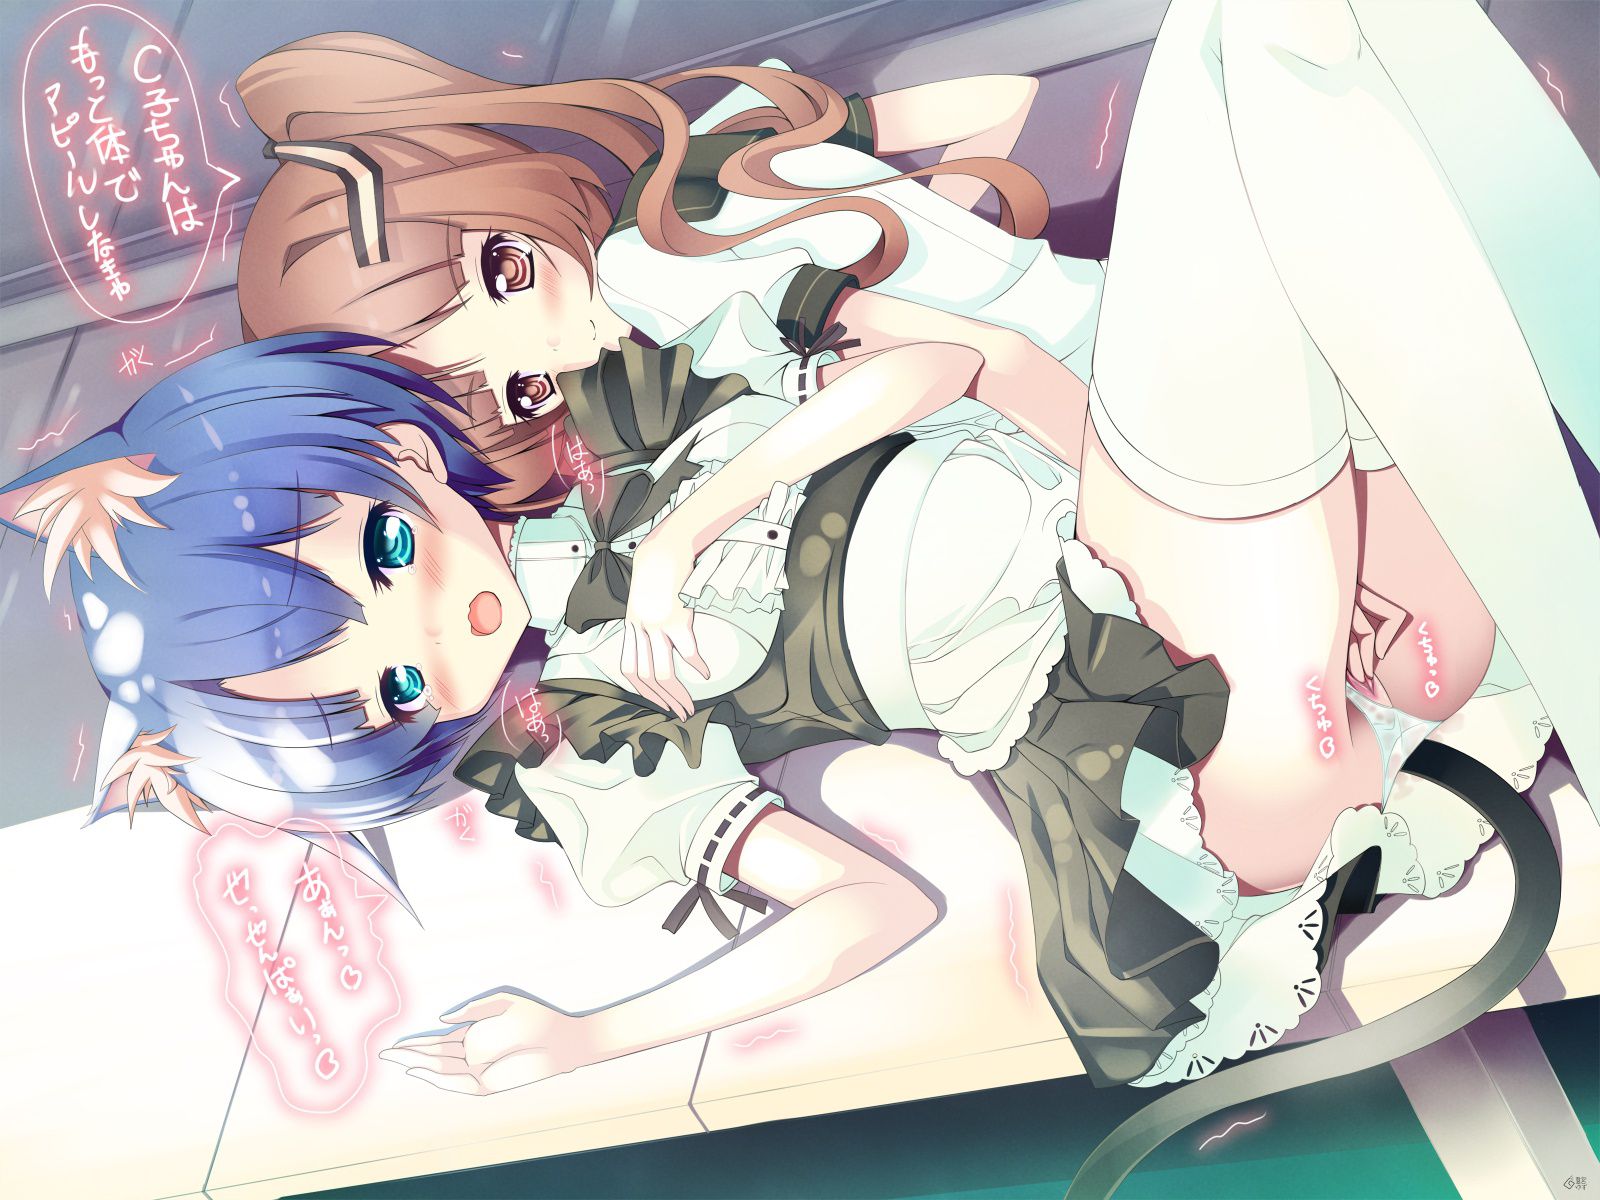 Cute Maid's Service Erotic Image Part 11 5